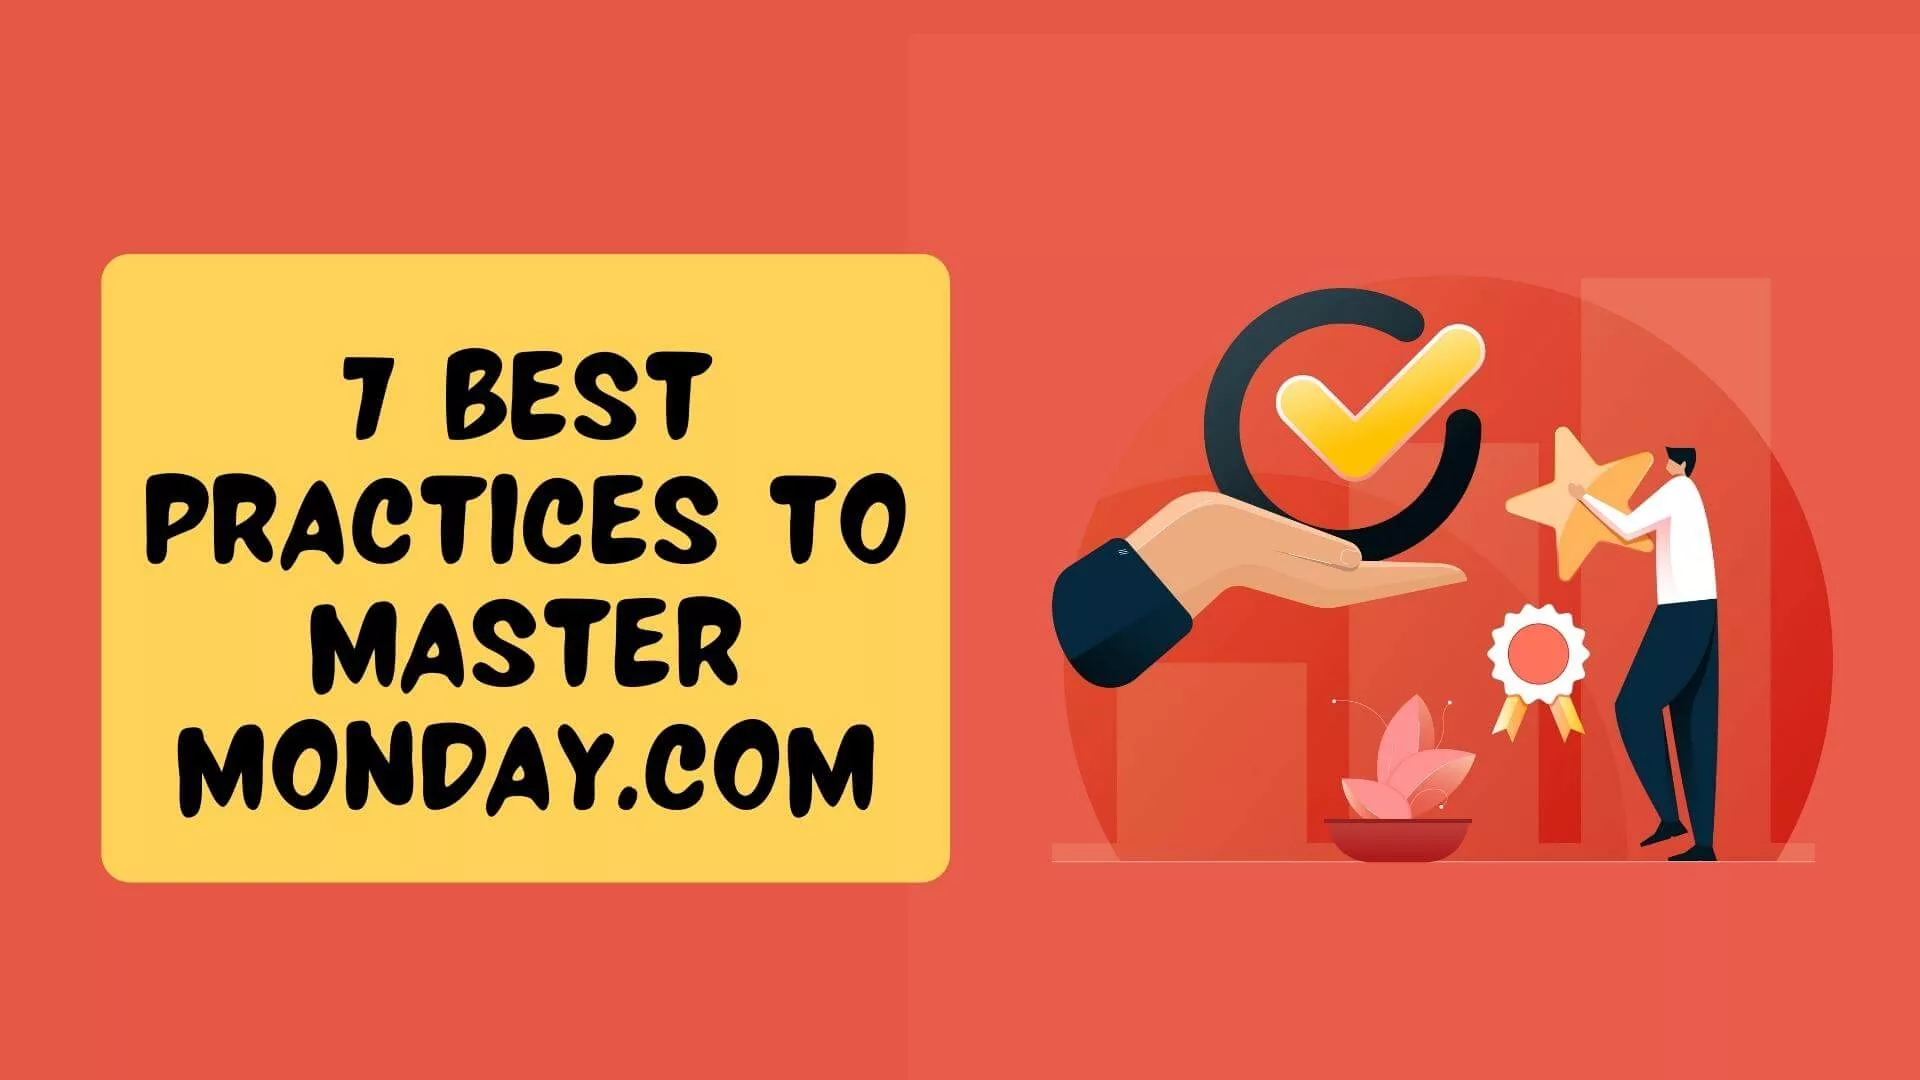 7 best practices to monday.com